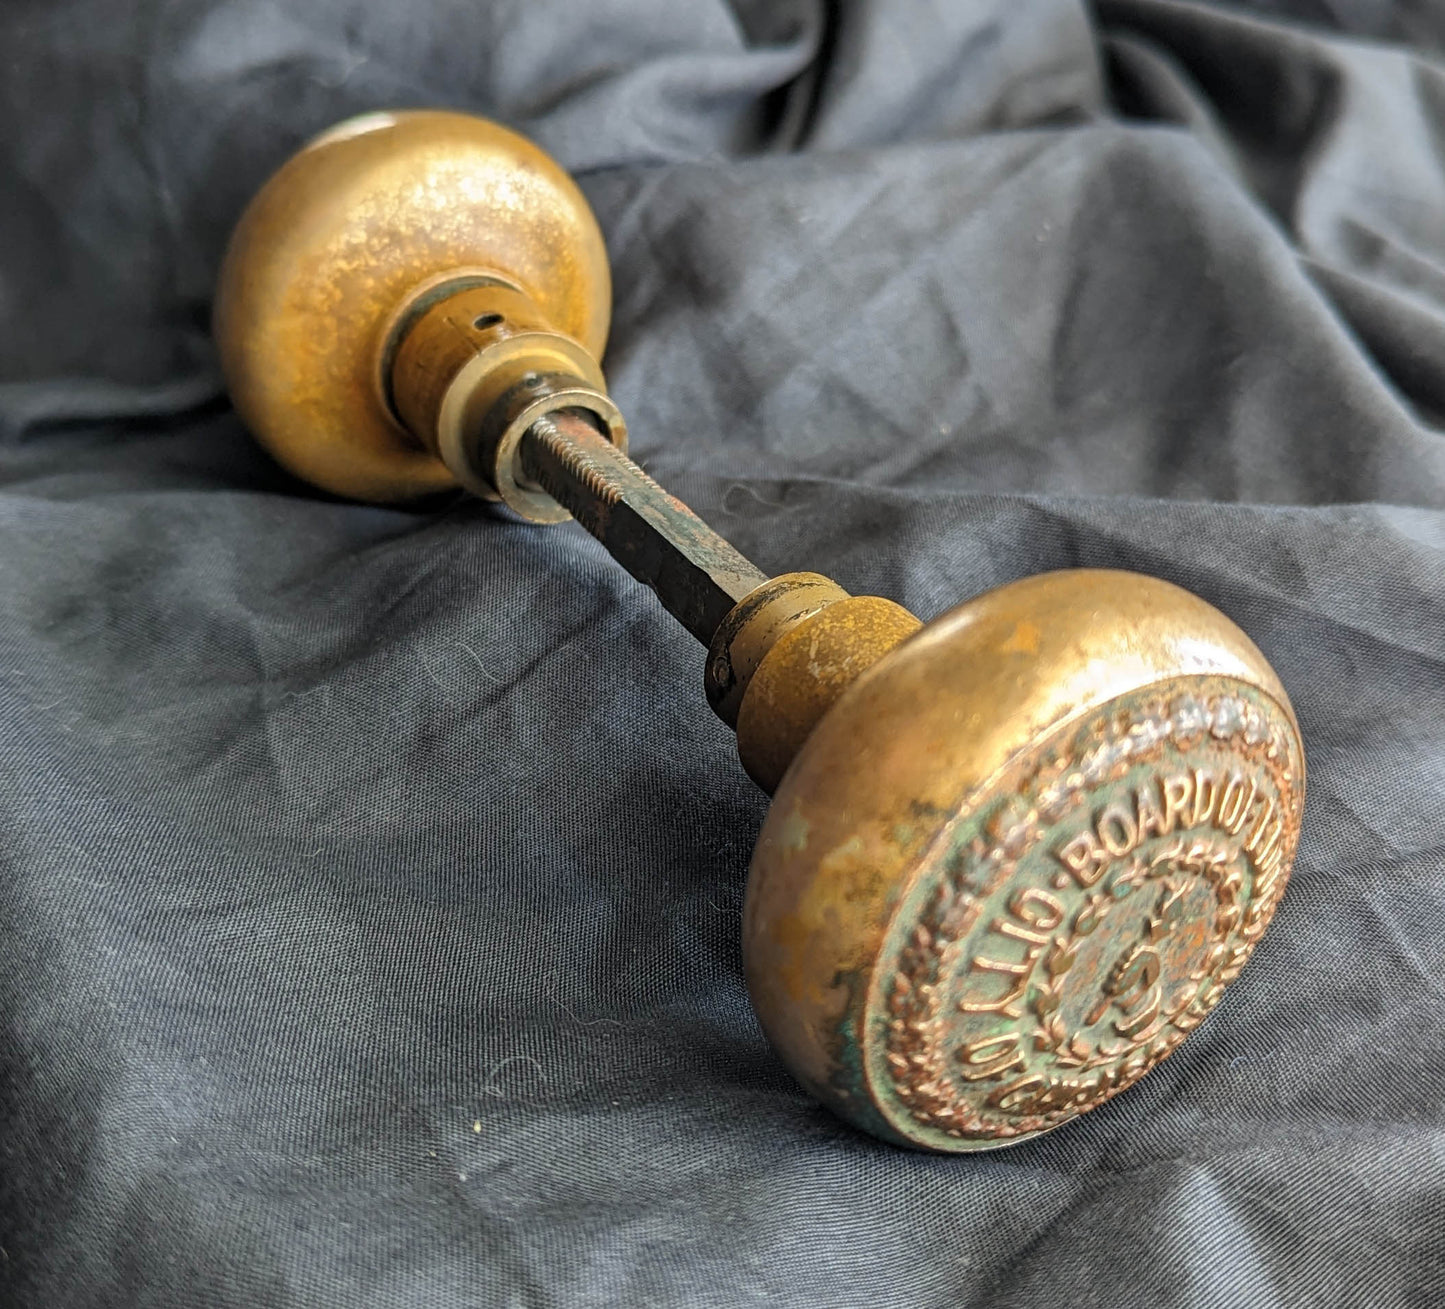 Pair Antique Vintage Old "City of Chicago Board of Education" SOLID Brass Doorknob Door Knobs Handles